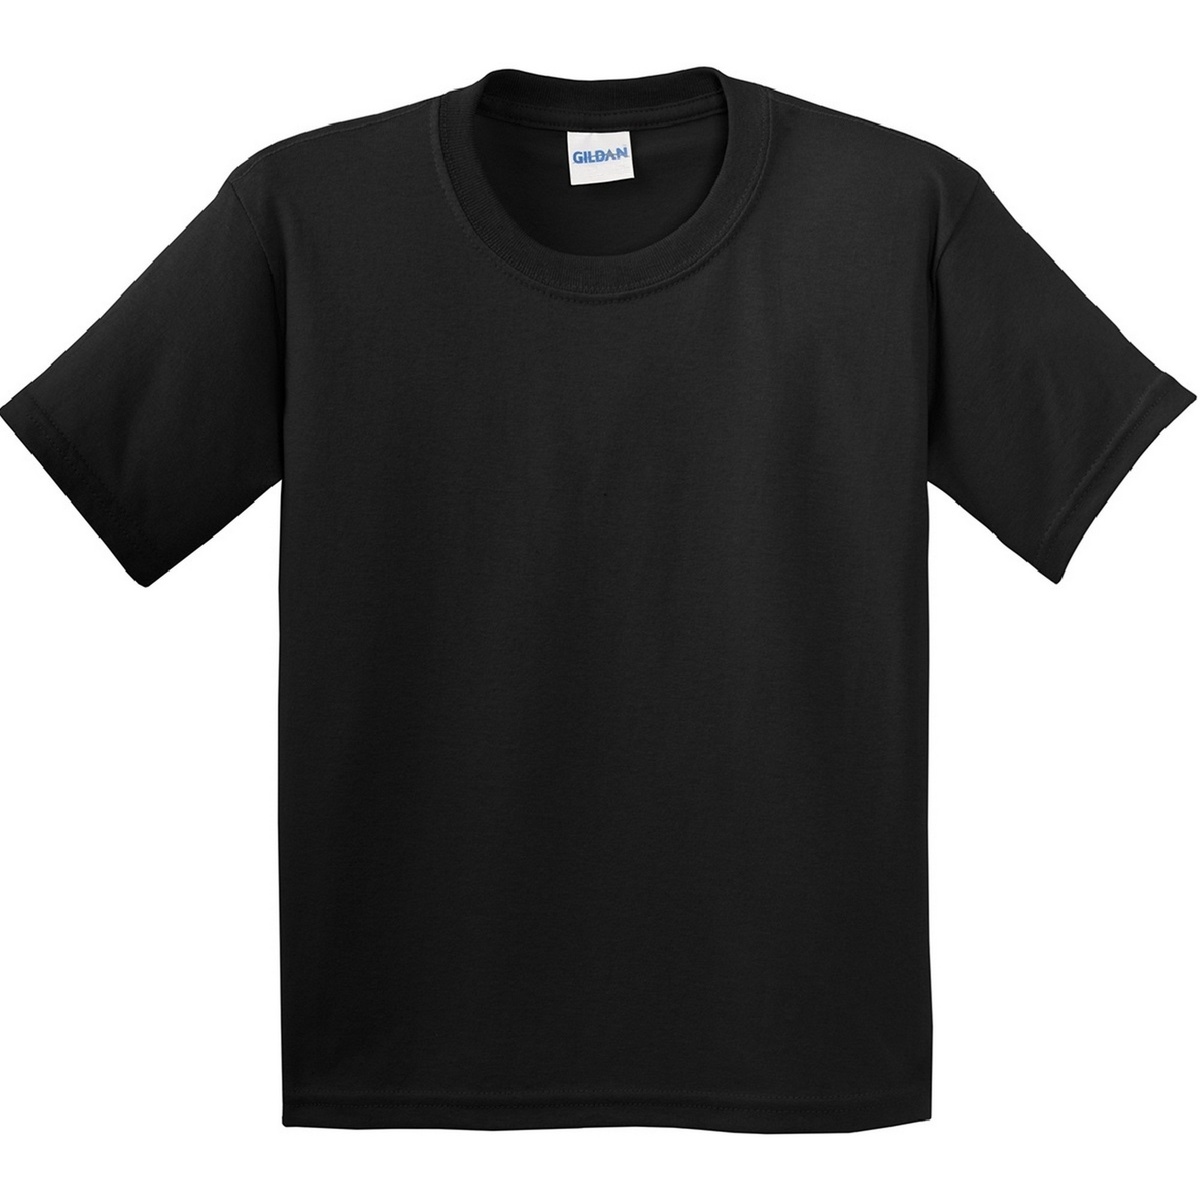 Vêtements Enfant Nike FC Top SS Away Mens Clothing Shirts Cargo Khaki Black Black 64000B Noir